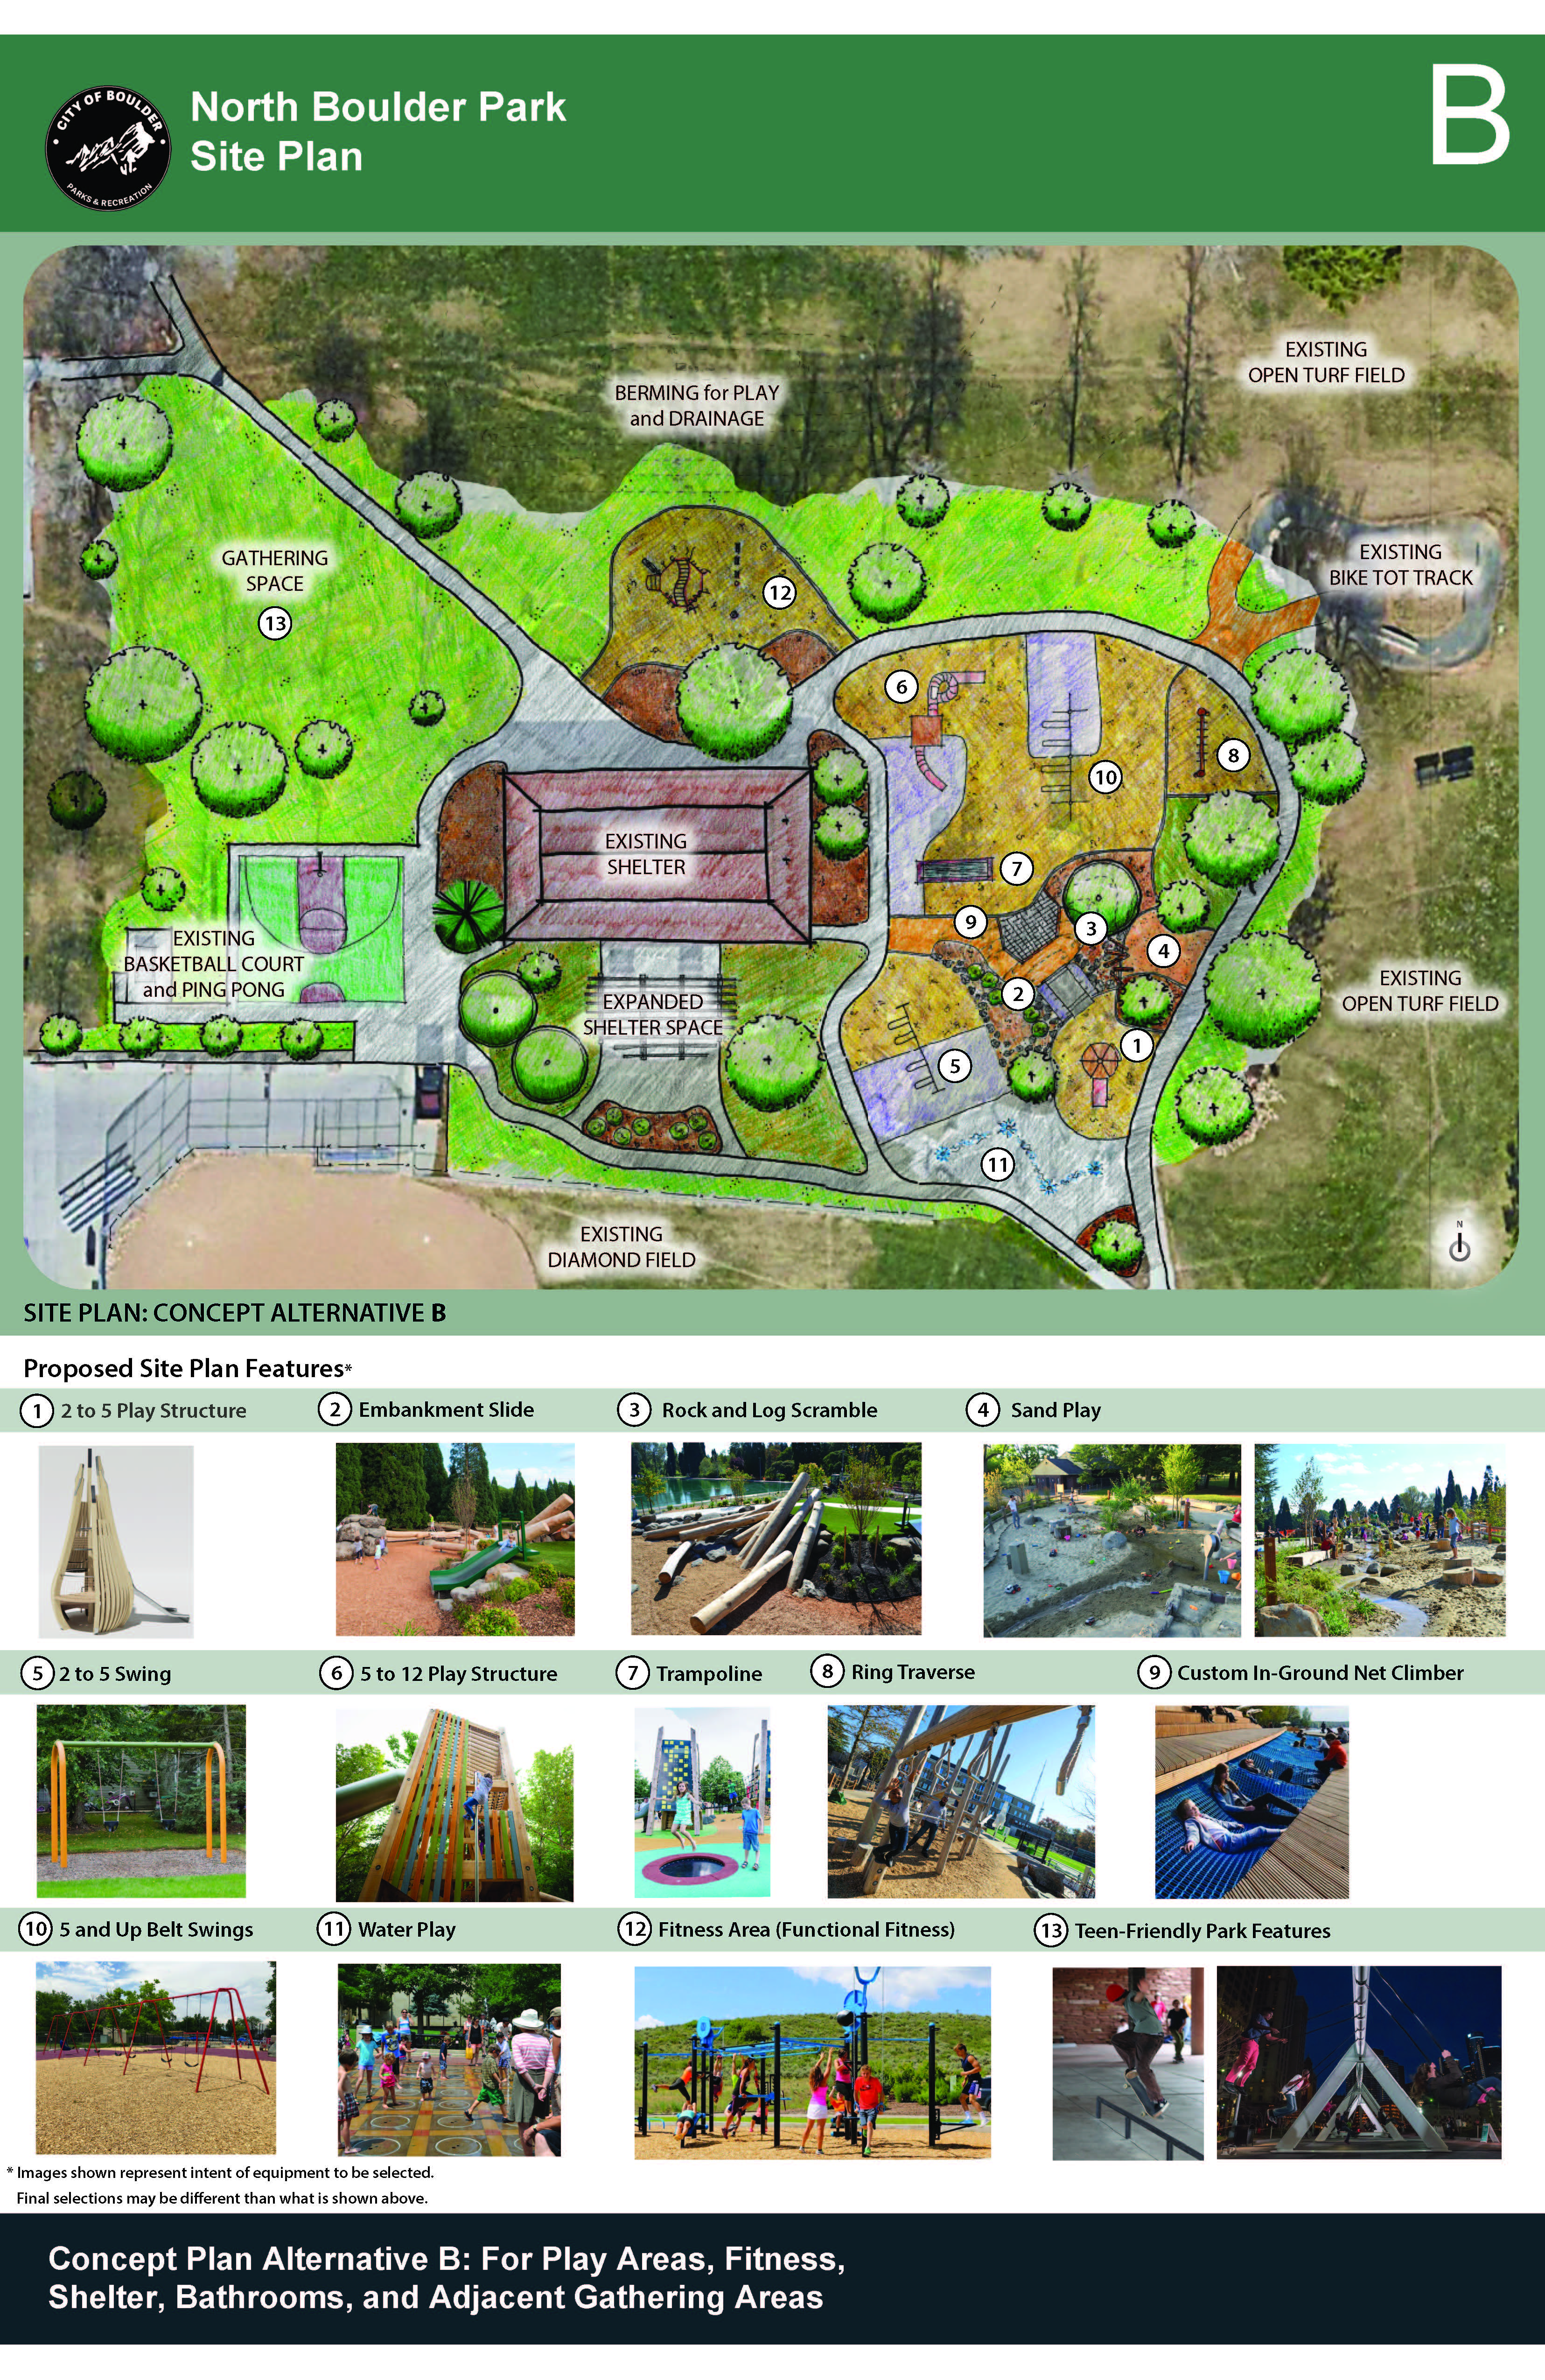 North Boulder Park Renovation Concept Plan Alternative B. Longer description included below.